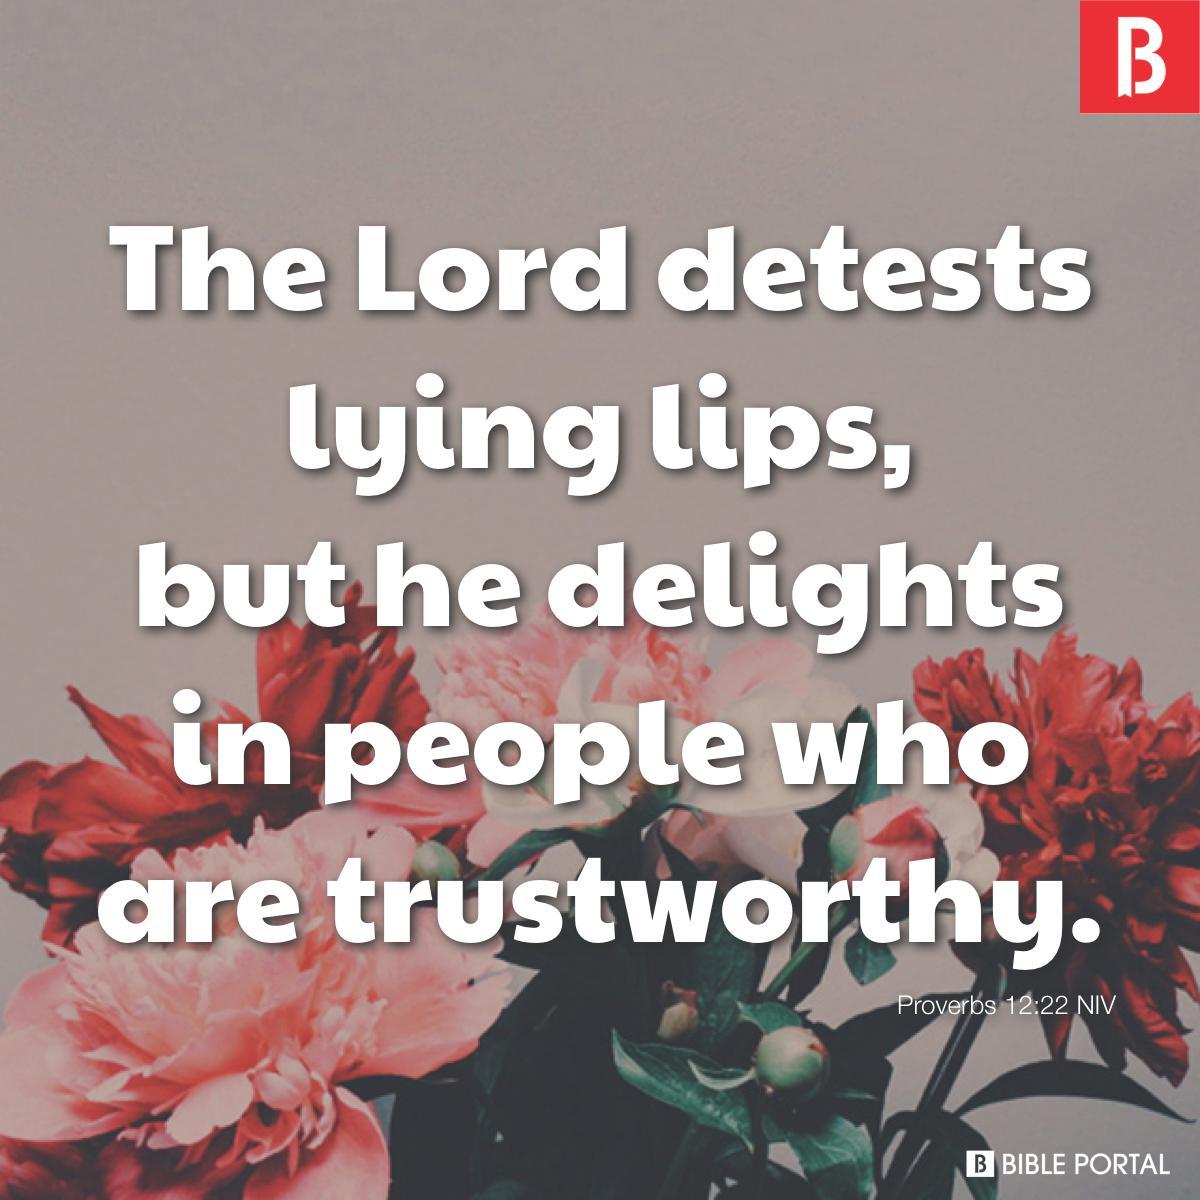 Proverbs 12:22 NIV